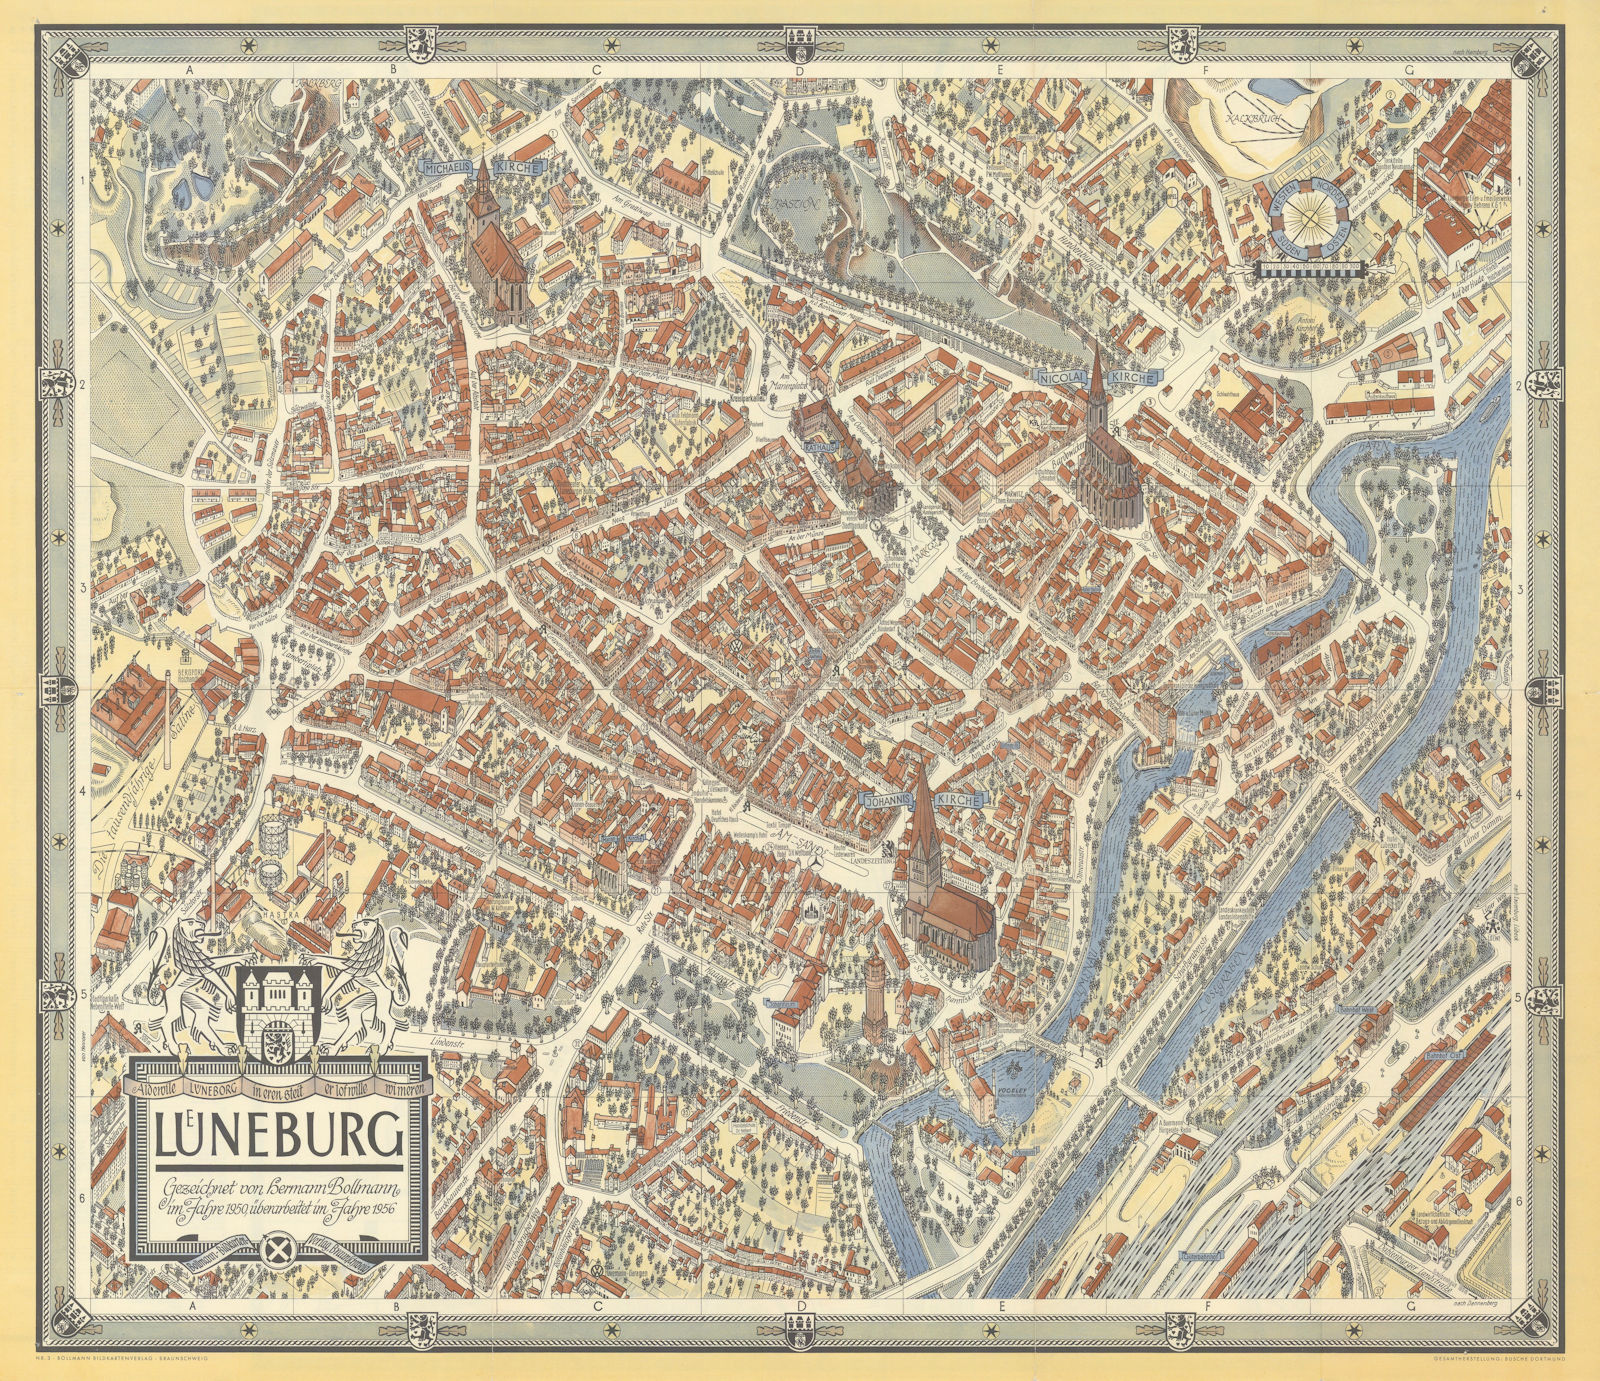 Associate Product Lüneburg pictorial bird's eye view city plan #3 by Hermann Bollmann 1956 map